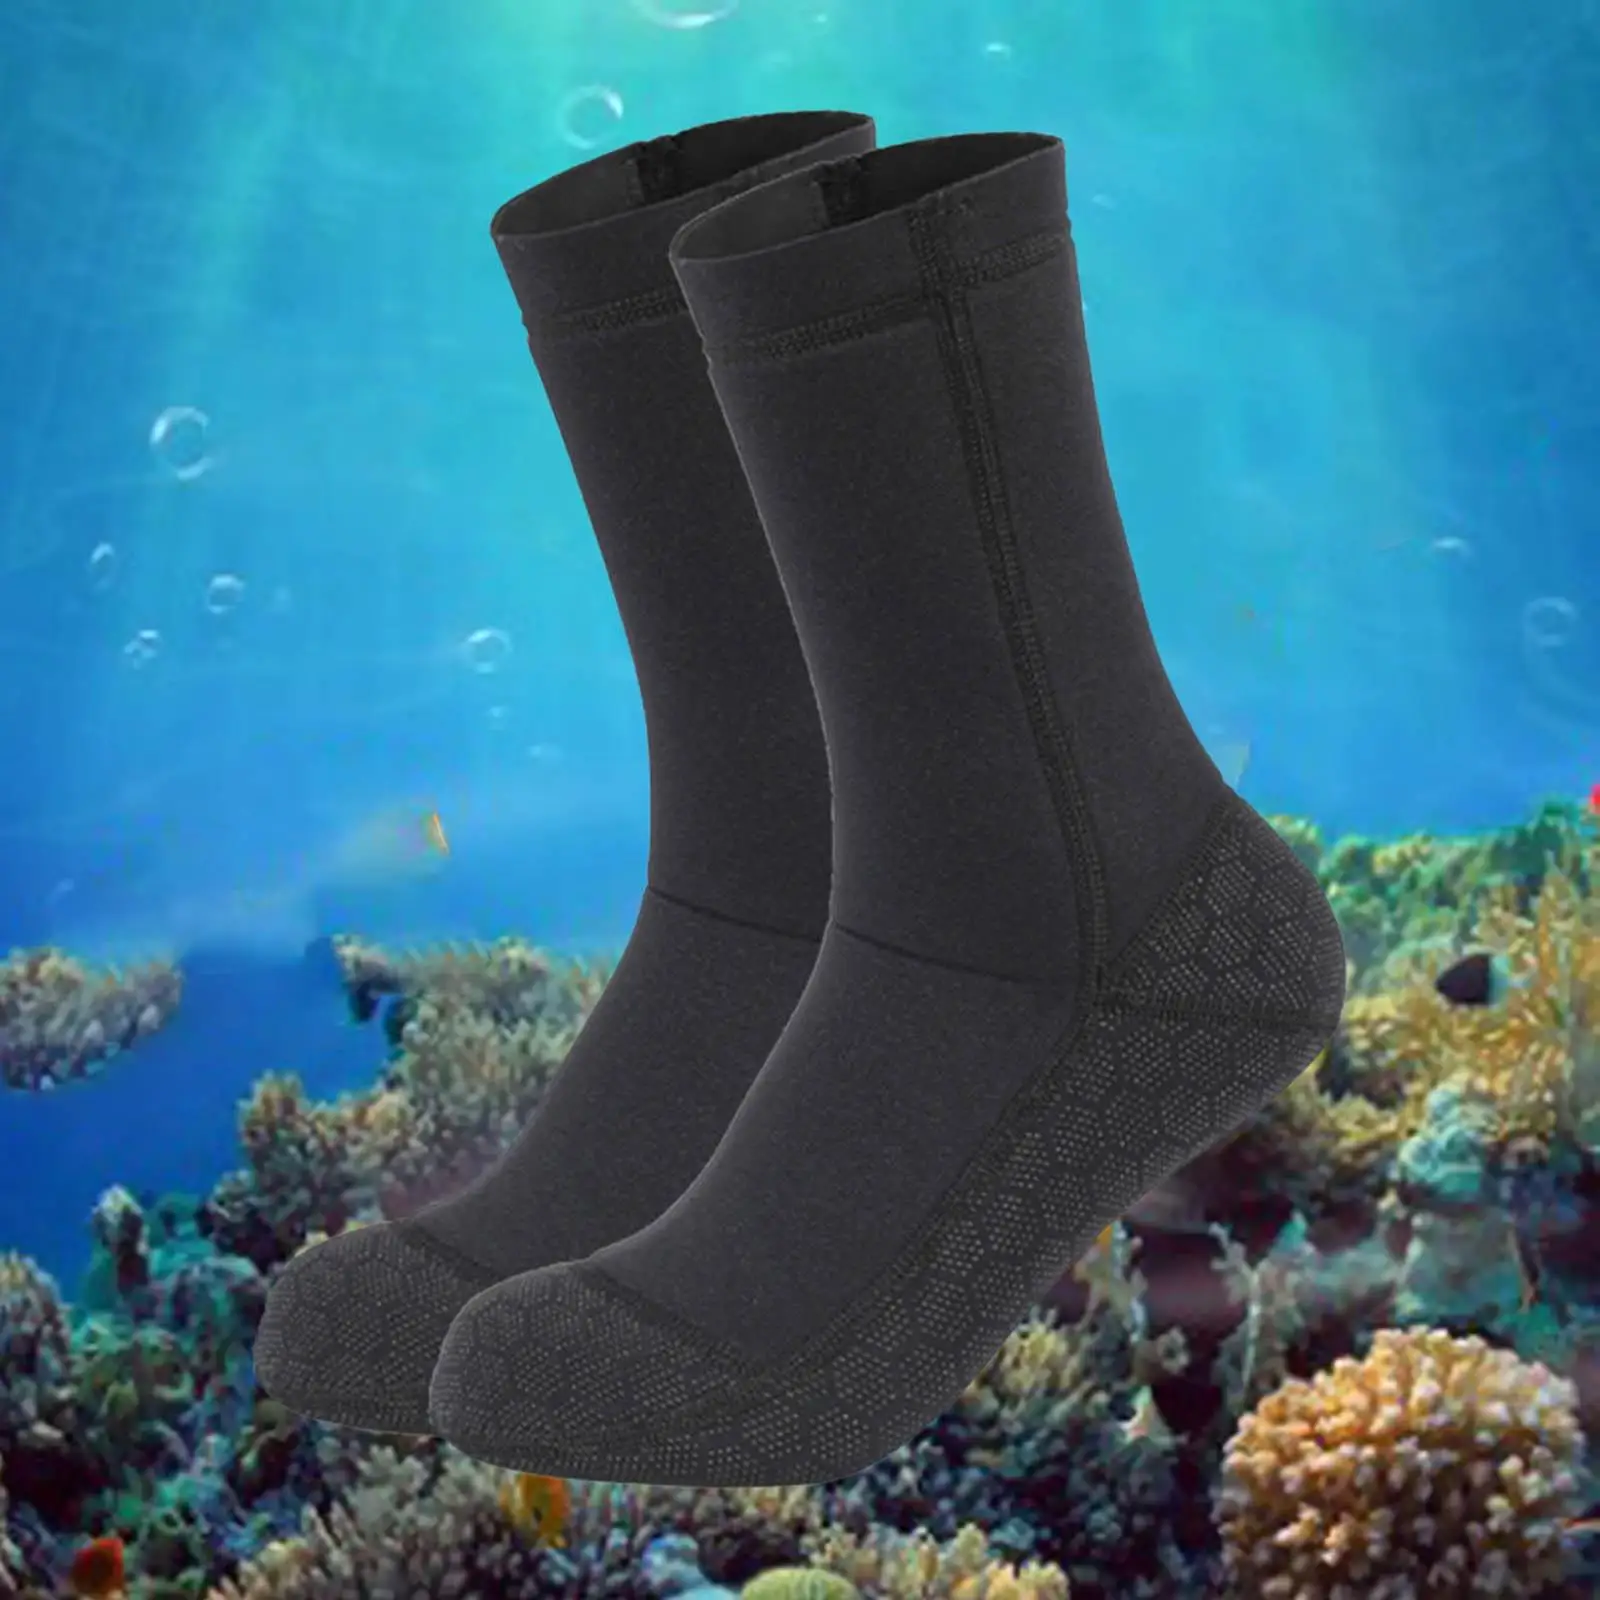 Diving Socks Flexible Warm Beach Fin Socks Sand Proof Water Socks Anti Slip for Water Sports Swim Kayaking Surfing Unisex Adult